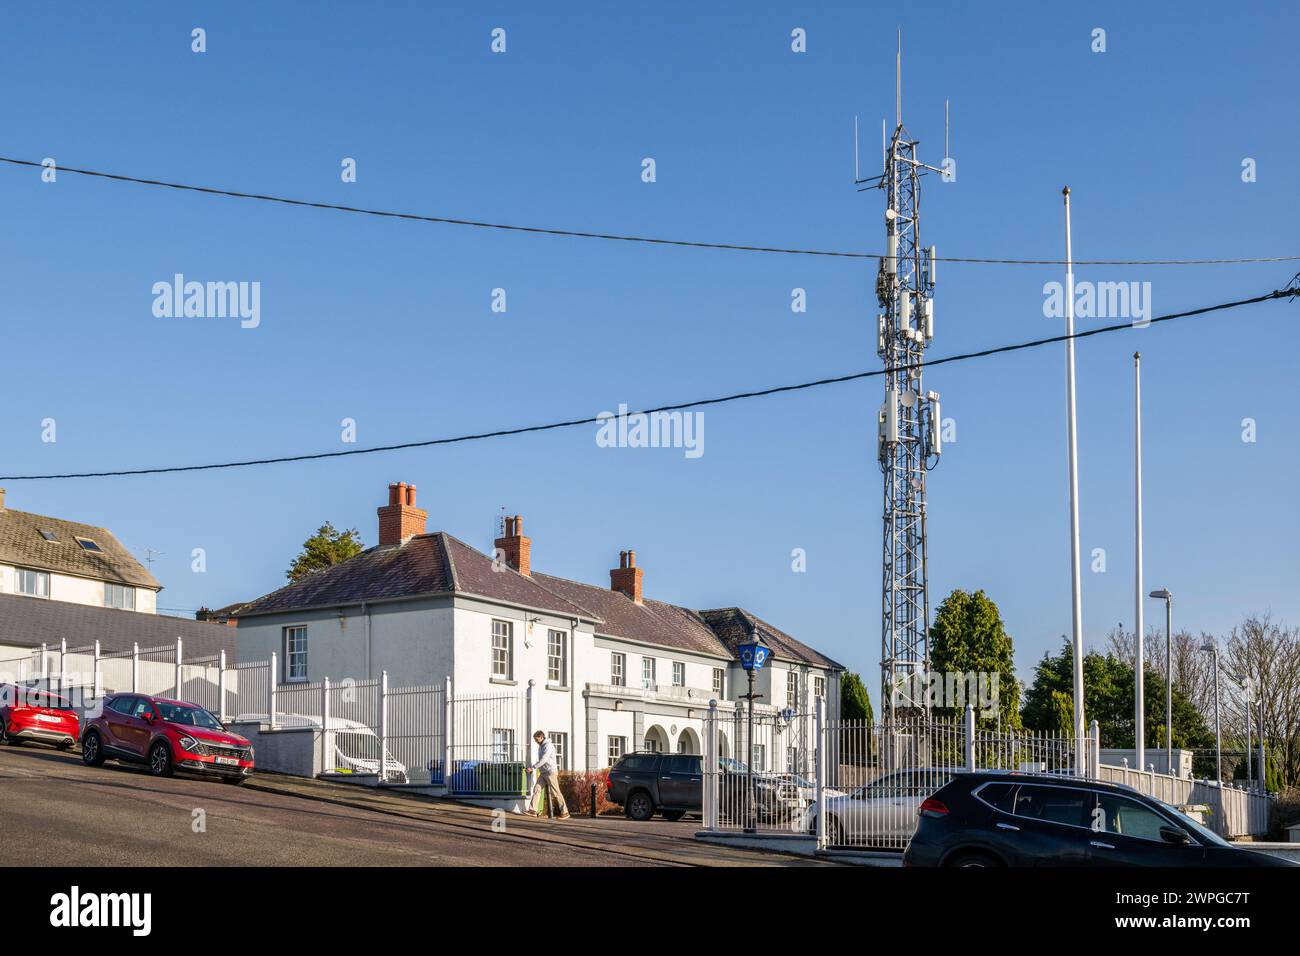 Clonakilty Garda Station, Clonakilty, West Cork, Irland. Stockfoto